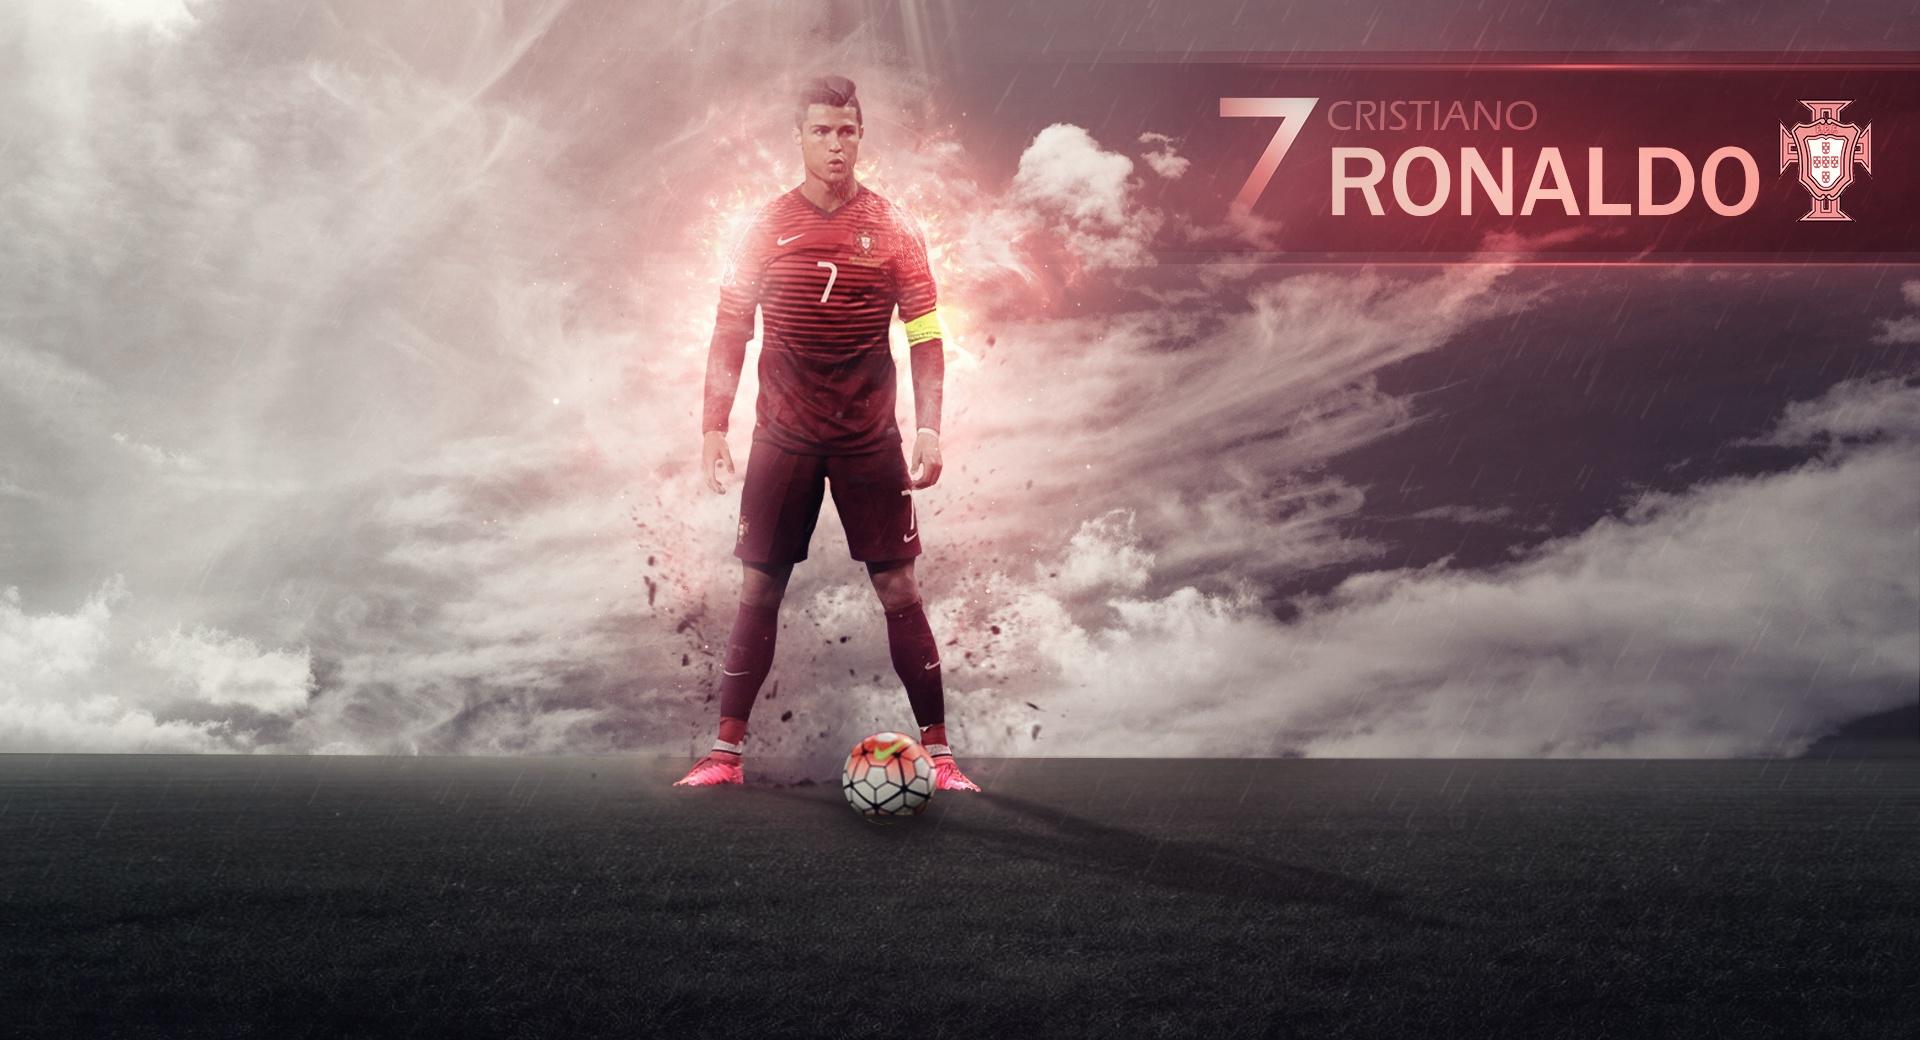 UEFA EURO 2016  Cristiano Ronaldo at 1024 x 1024 iPad size wallpapers HD quality